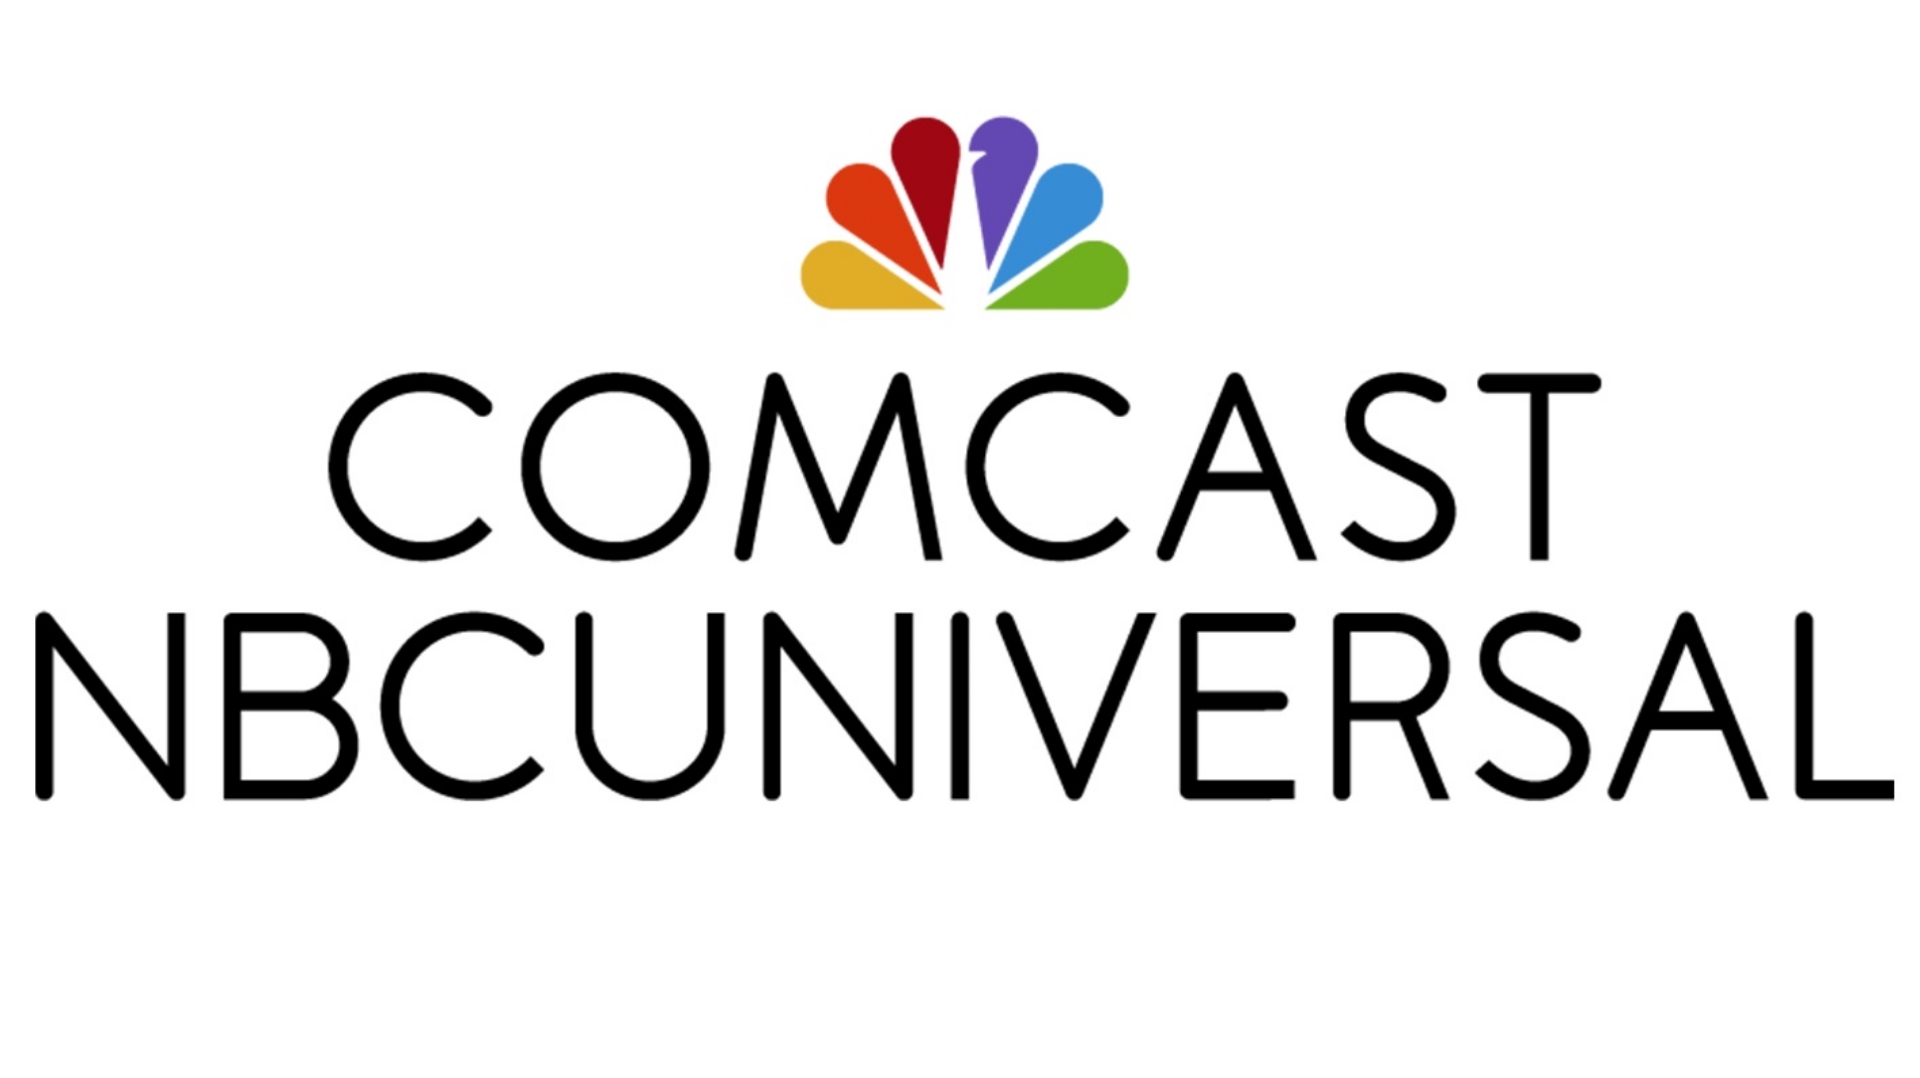 comcast-nbcuniversal-logo.jpg